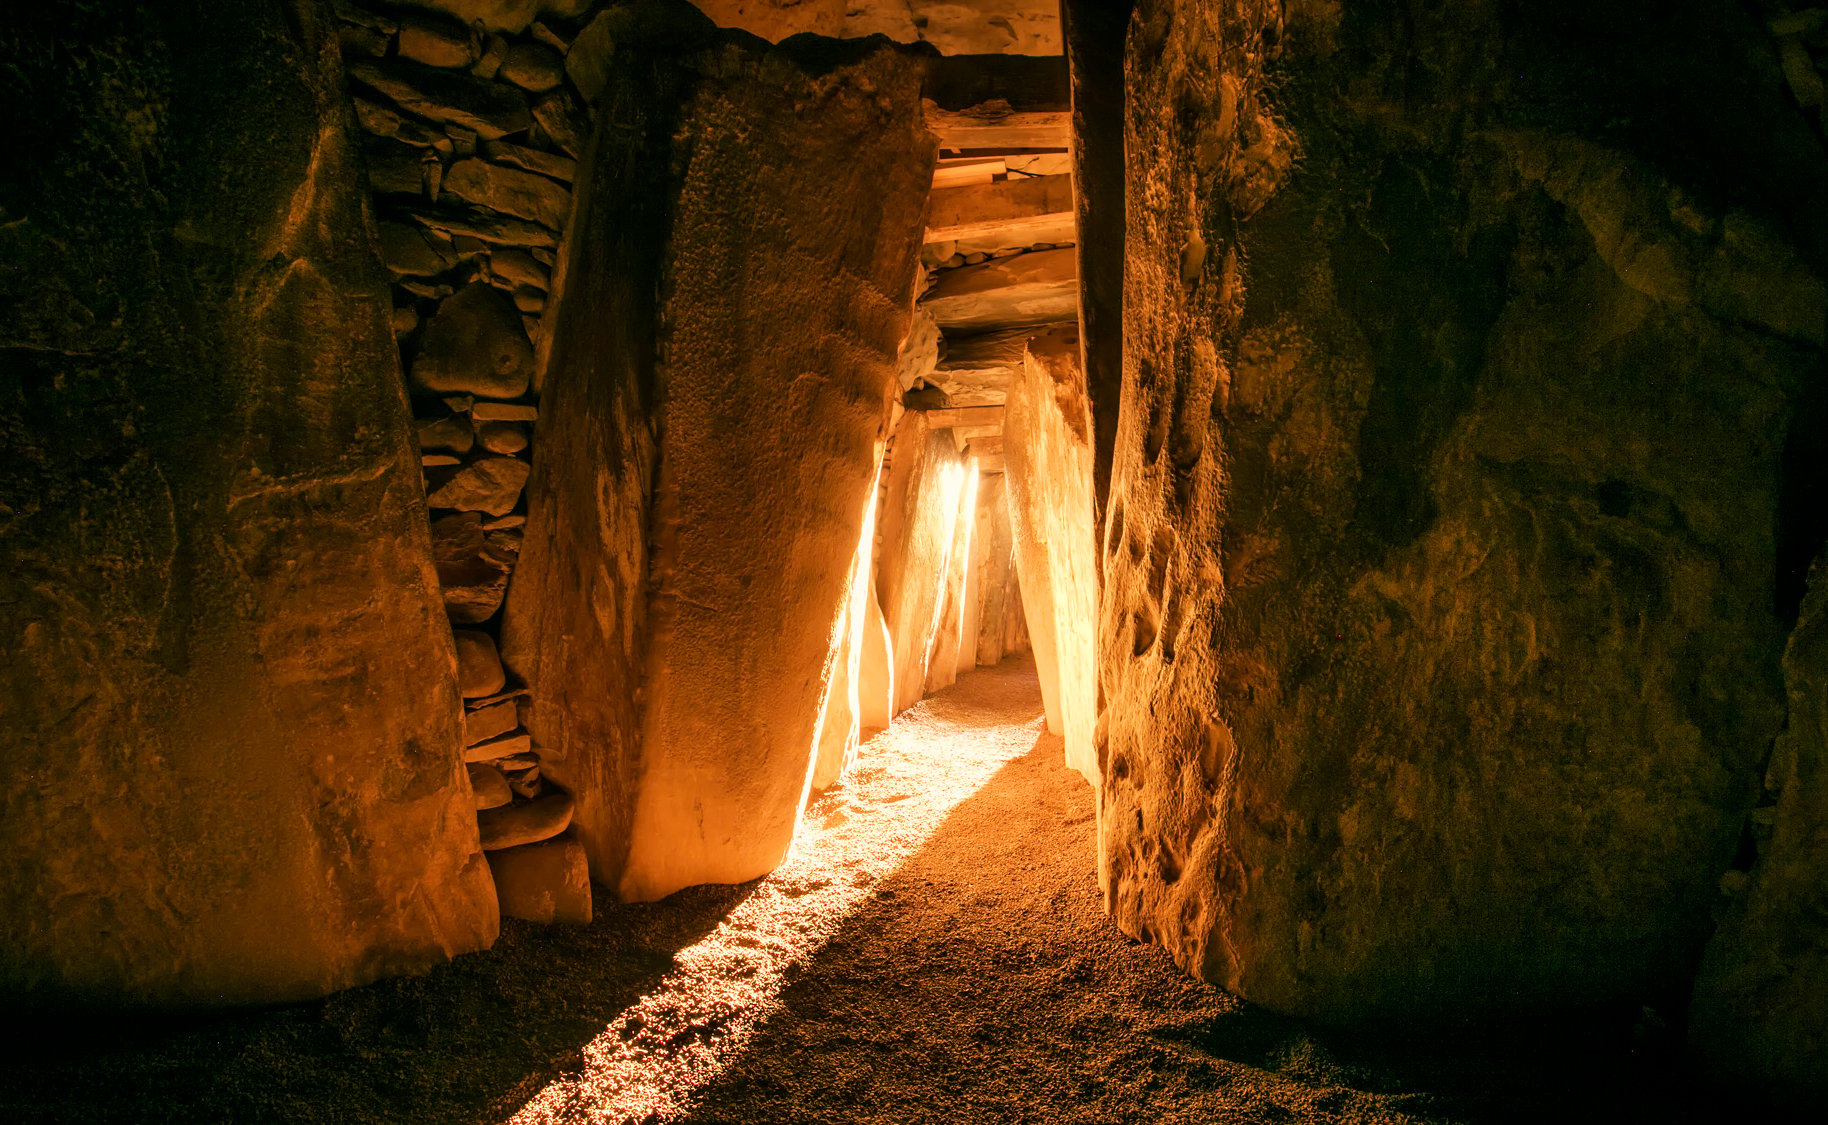 Warm light illuminates the ancient passage of Newgrange, Ireland, during the Winter Solstice, reminiscent of Druid ceremonies.